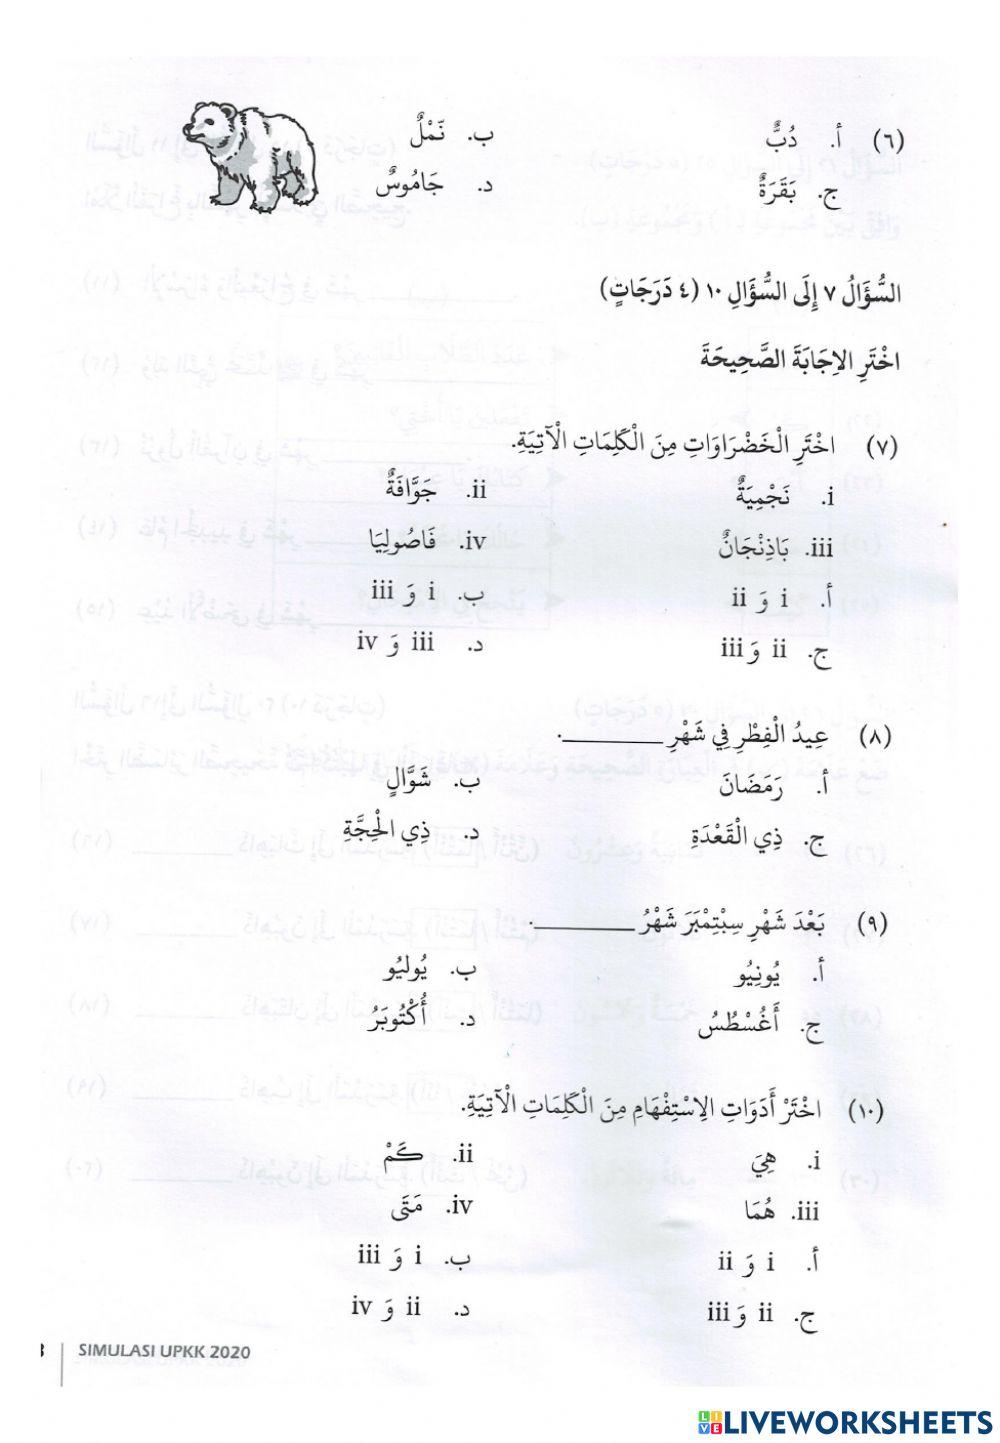 Latihan uji minda bahasa arab